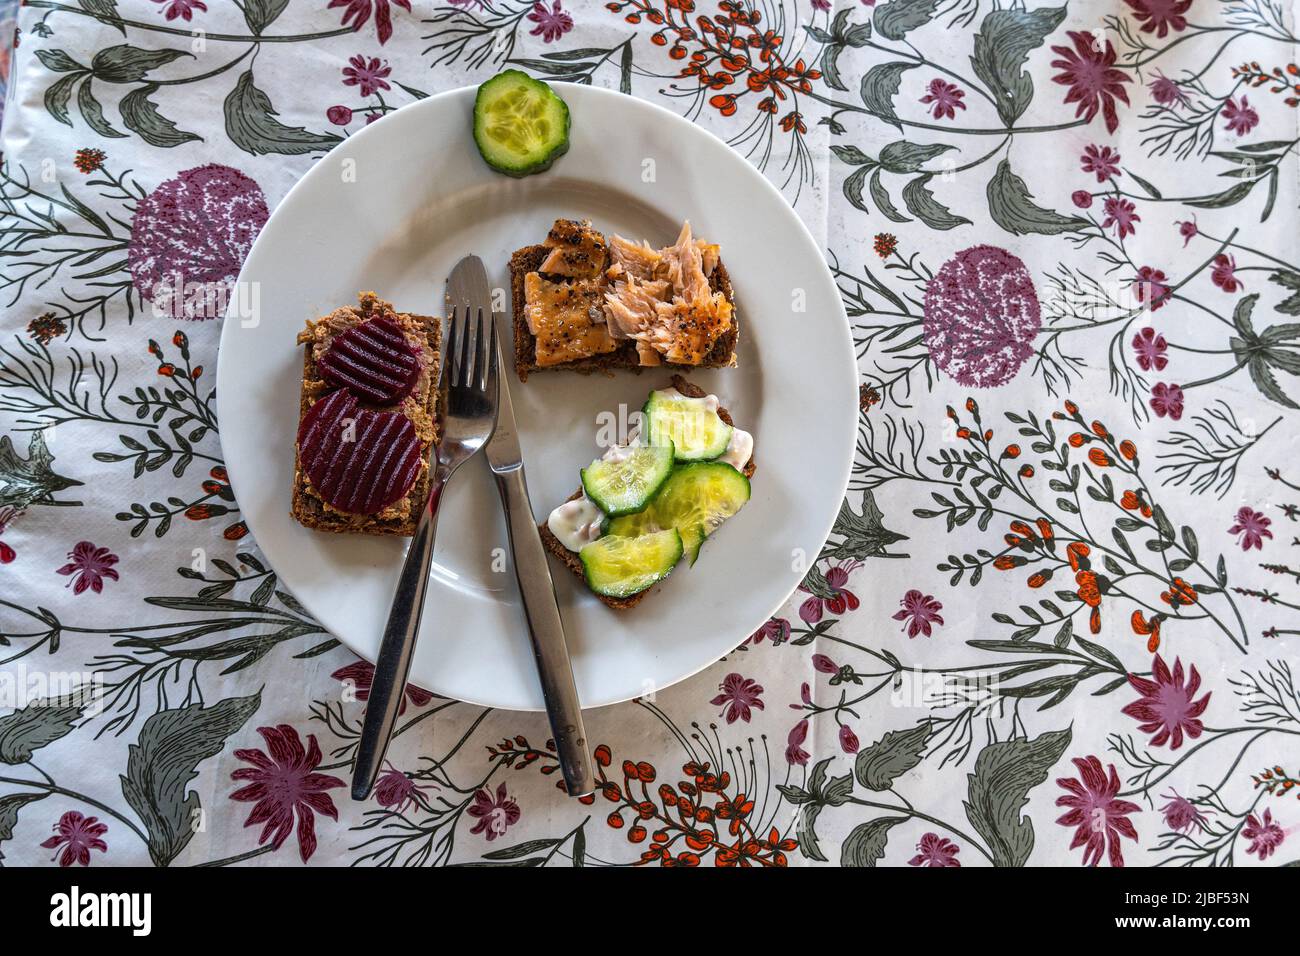 Ingredientes típicos de una smørrebrød casera danesa. Salmón ahumado sobre pan negro, frikadelle, remolacha, pepinos. Assens, Dinamarca, Europa Foto de stock